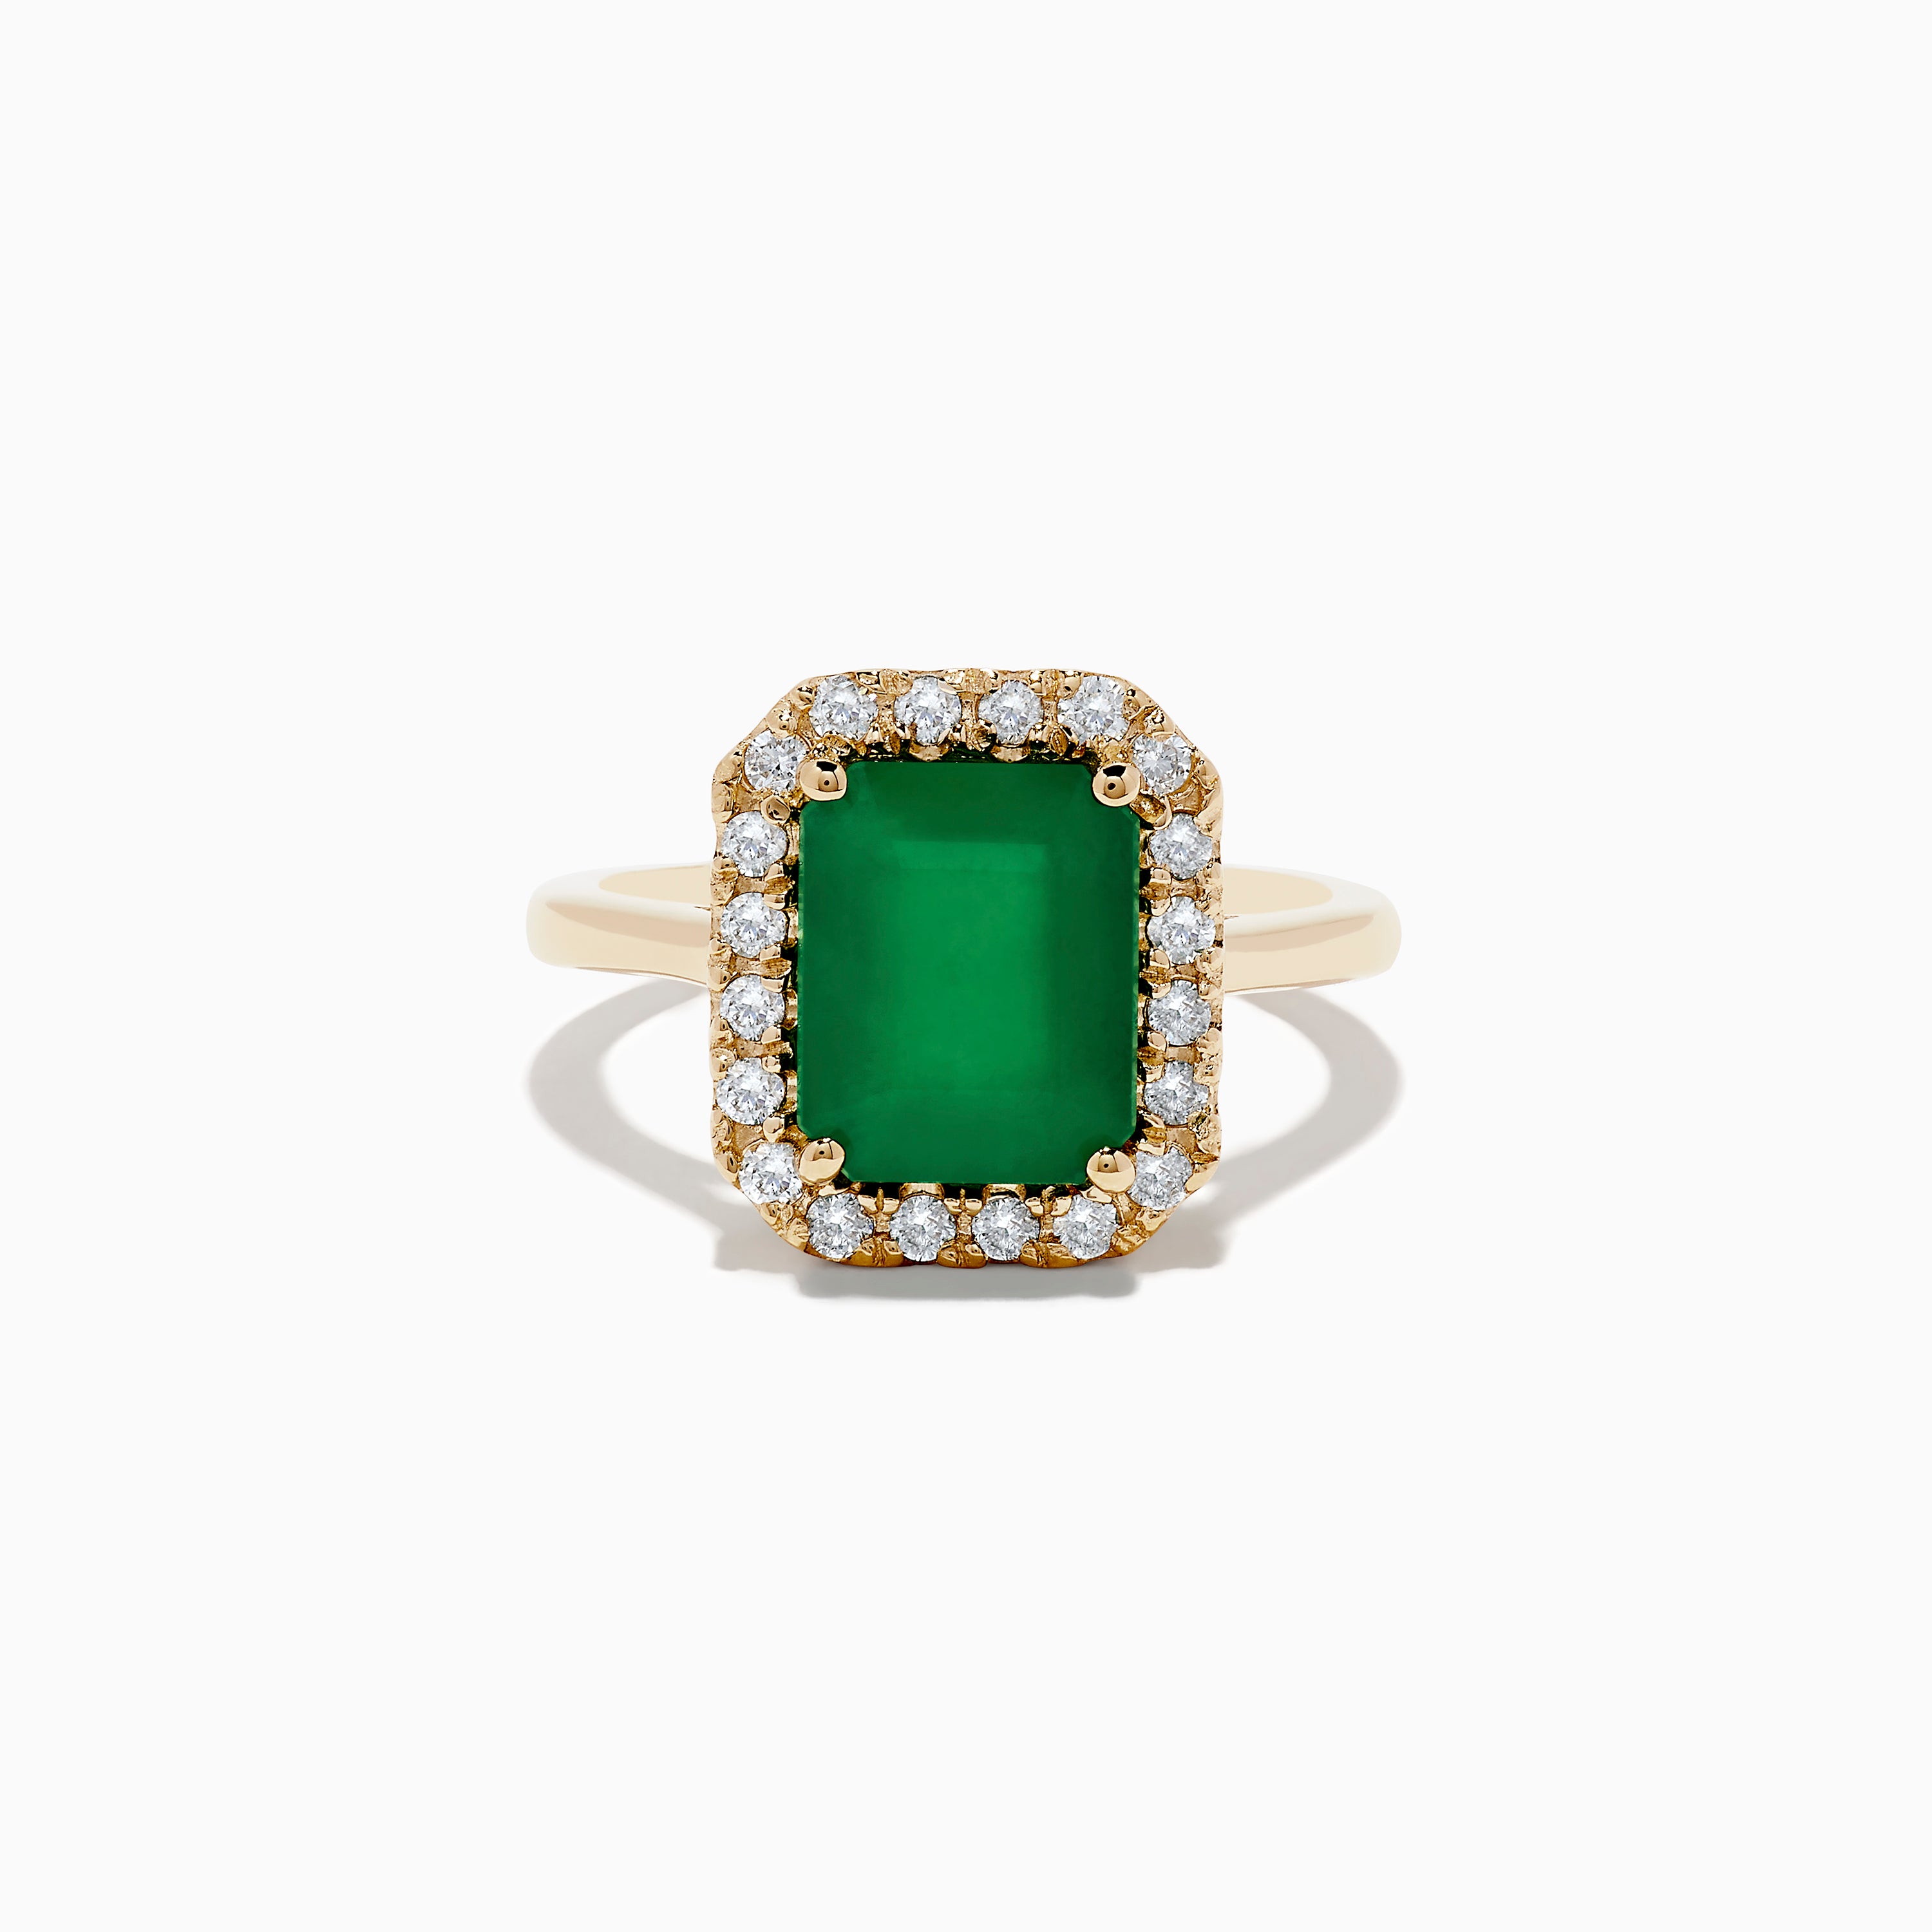 14K White Gold Emerald and Diamond Ring 001-200-1000307 | Bluestone Jewelry  | Tahoe City, CA